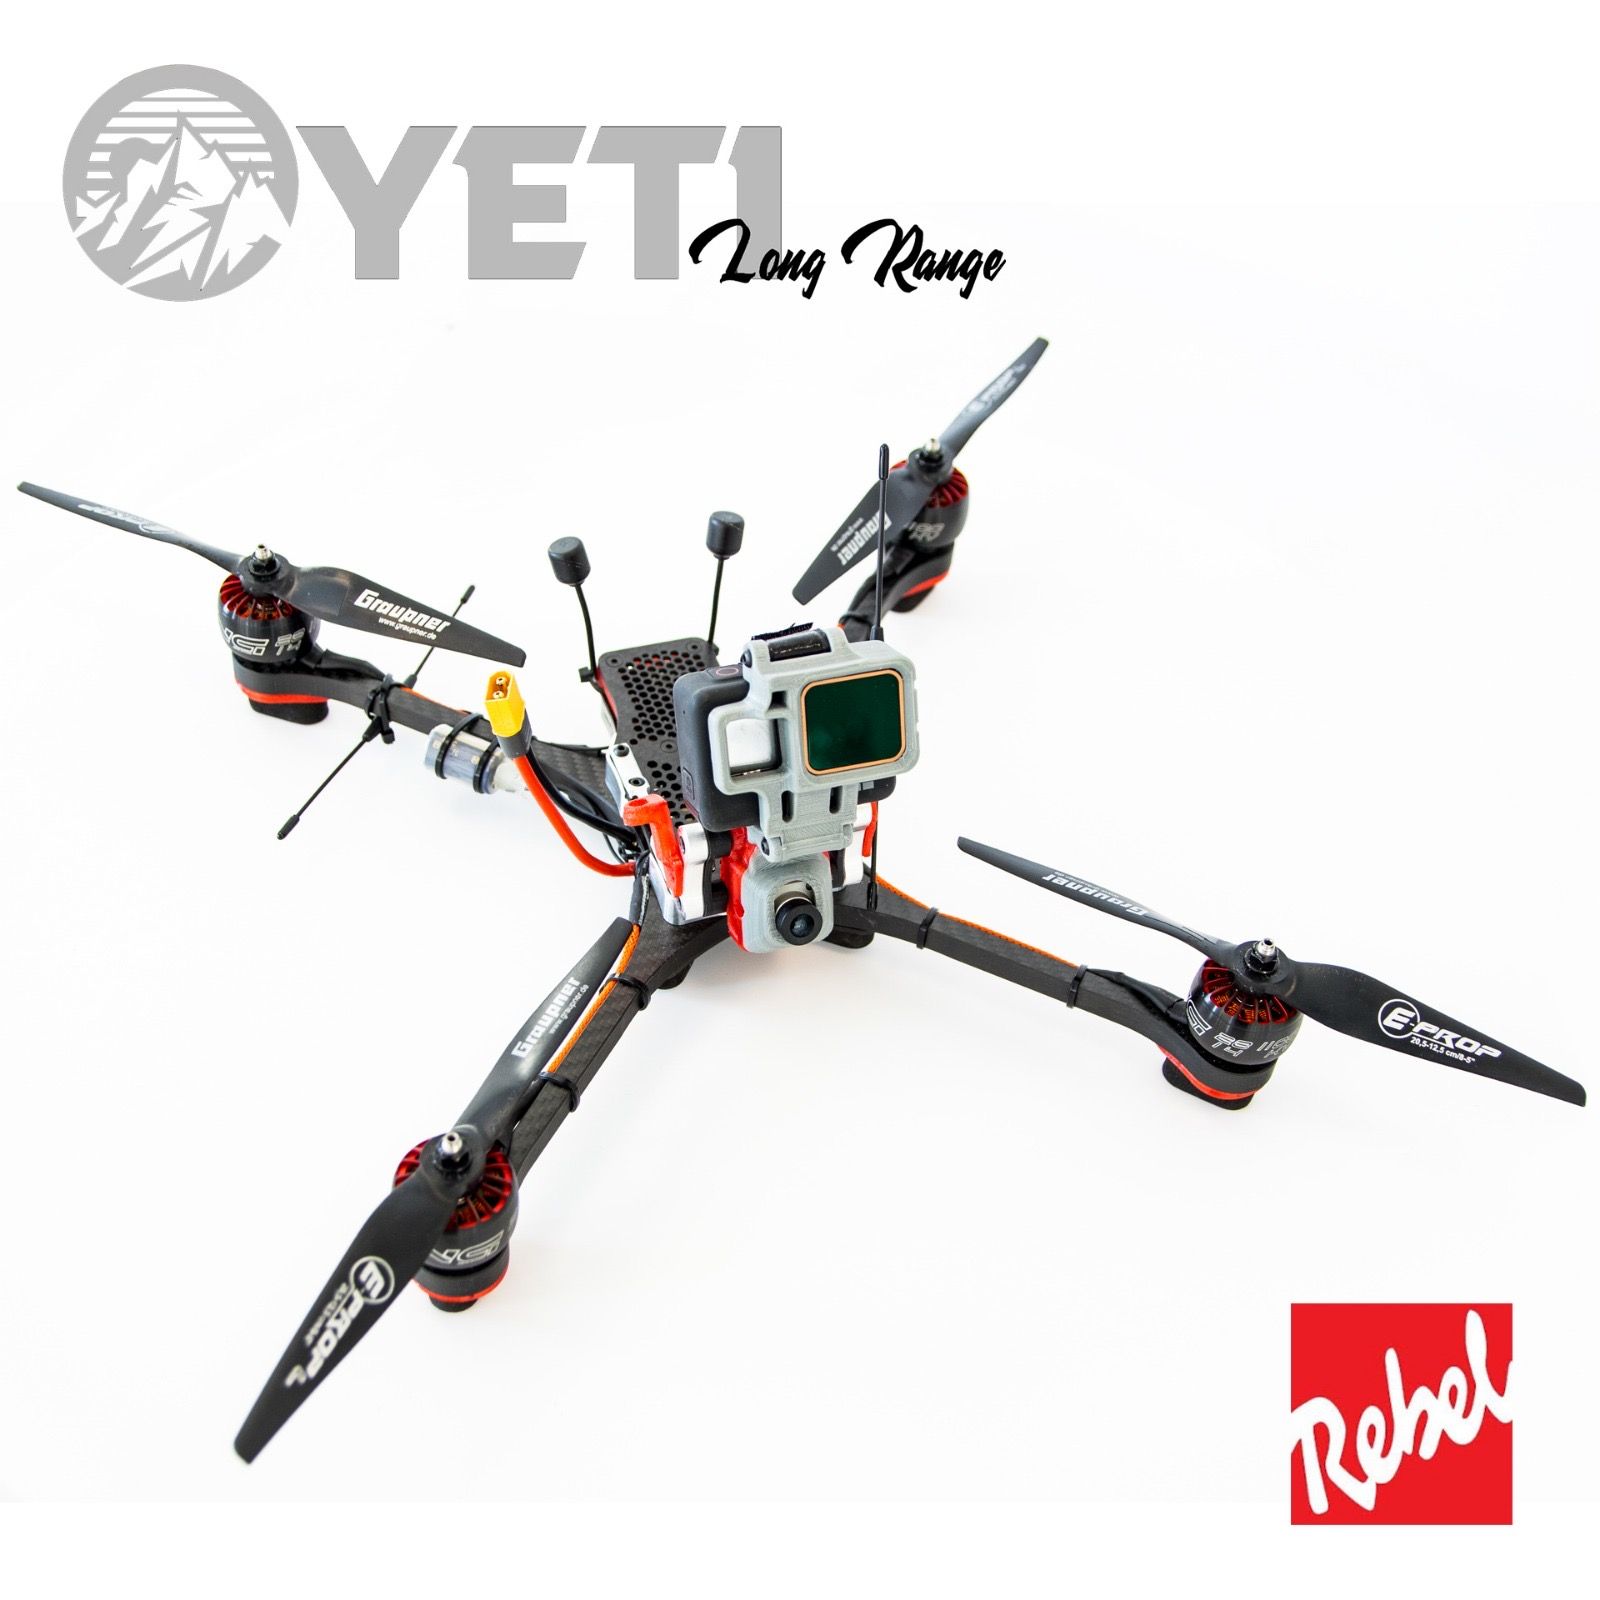 Yeti 8 Analog Ready to Fly - Rebel Miniquads